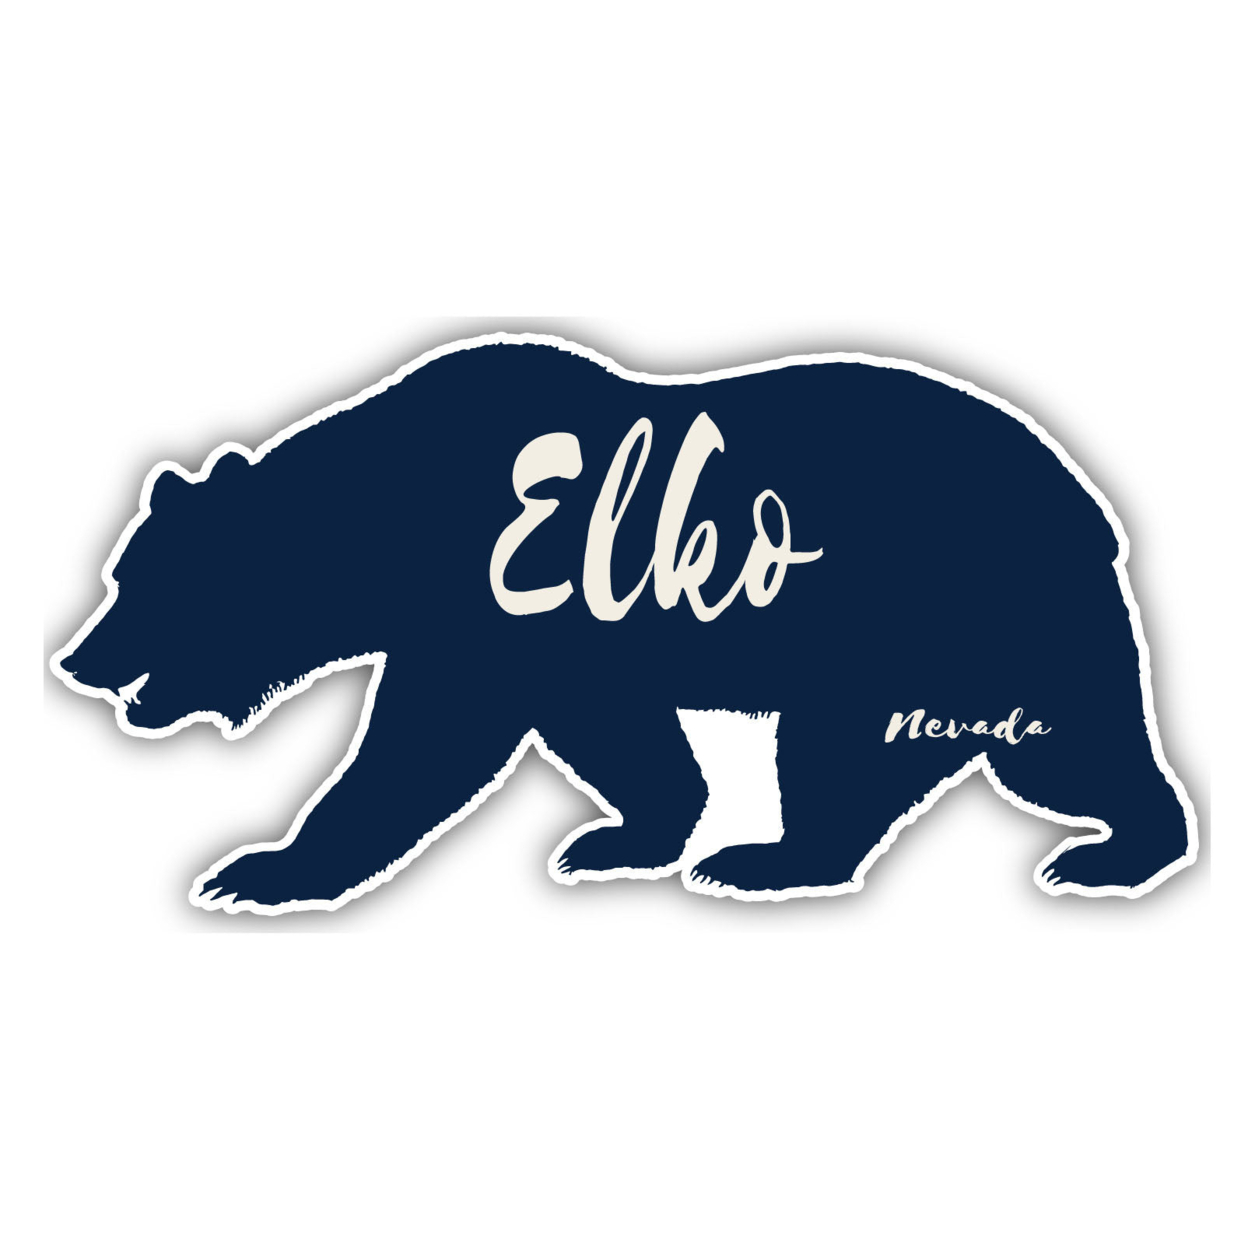 Elko Nevada Souvenir Decorative Stickers (Choose Theme And Size) - Single Unit, 4-Inch, Bear